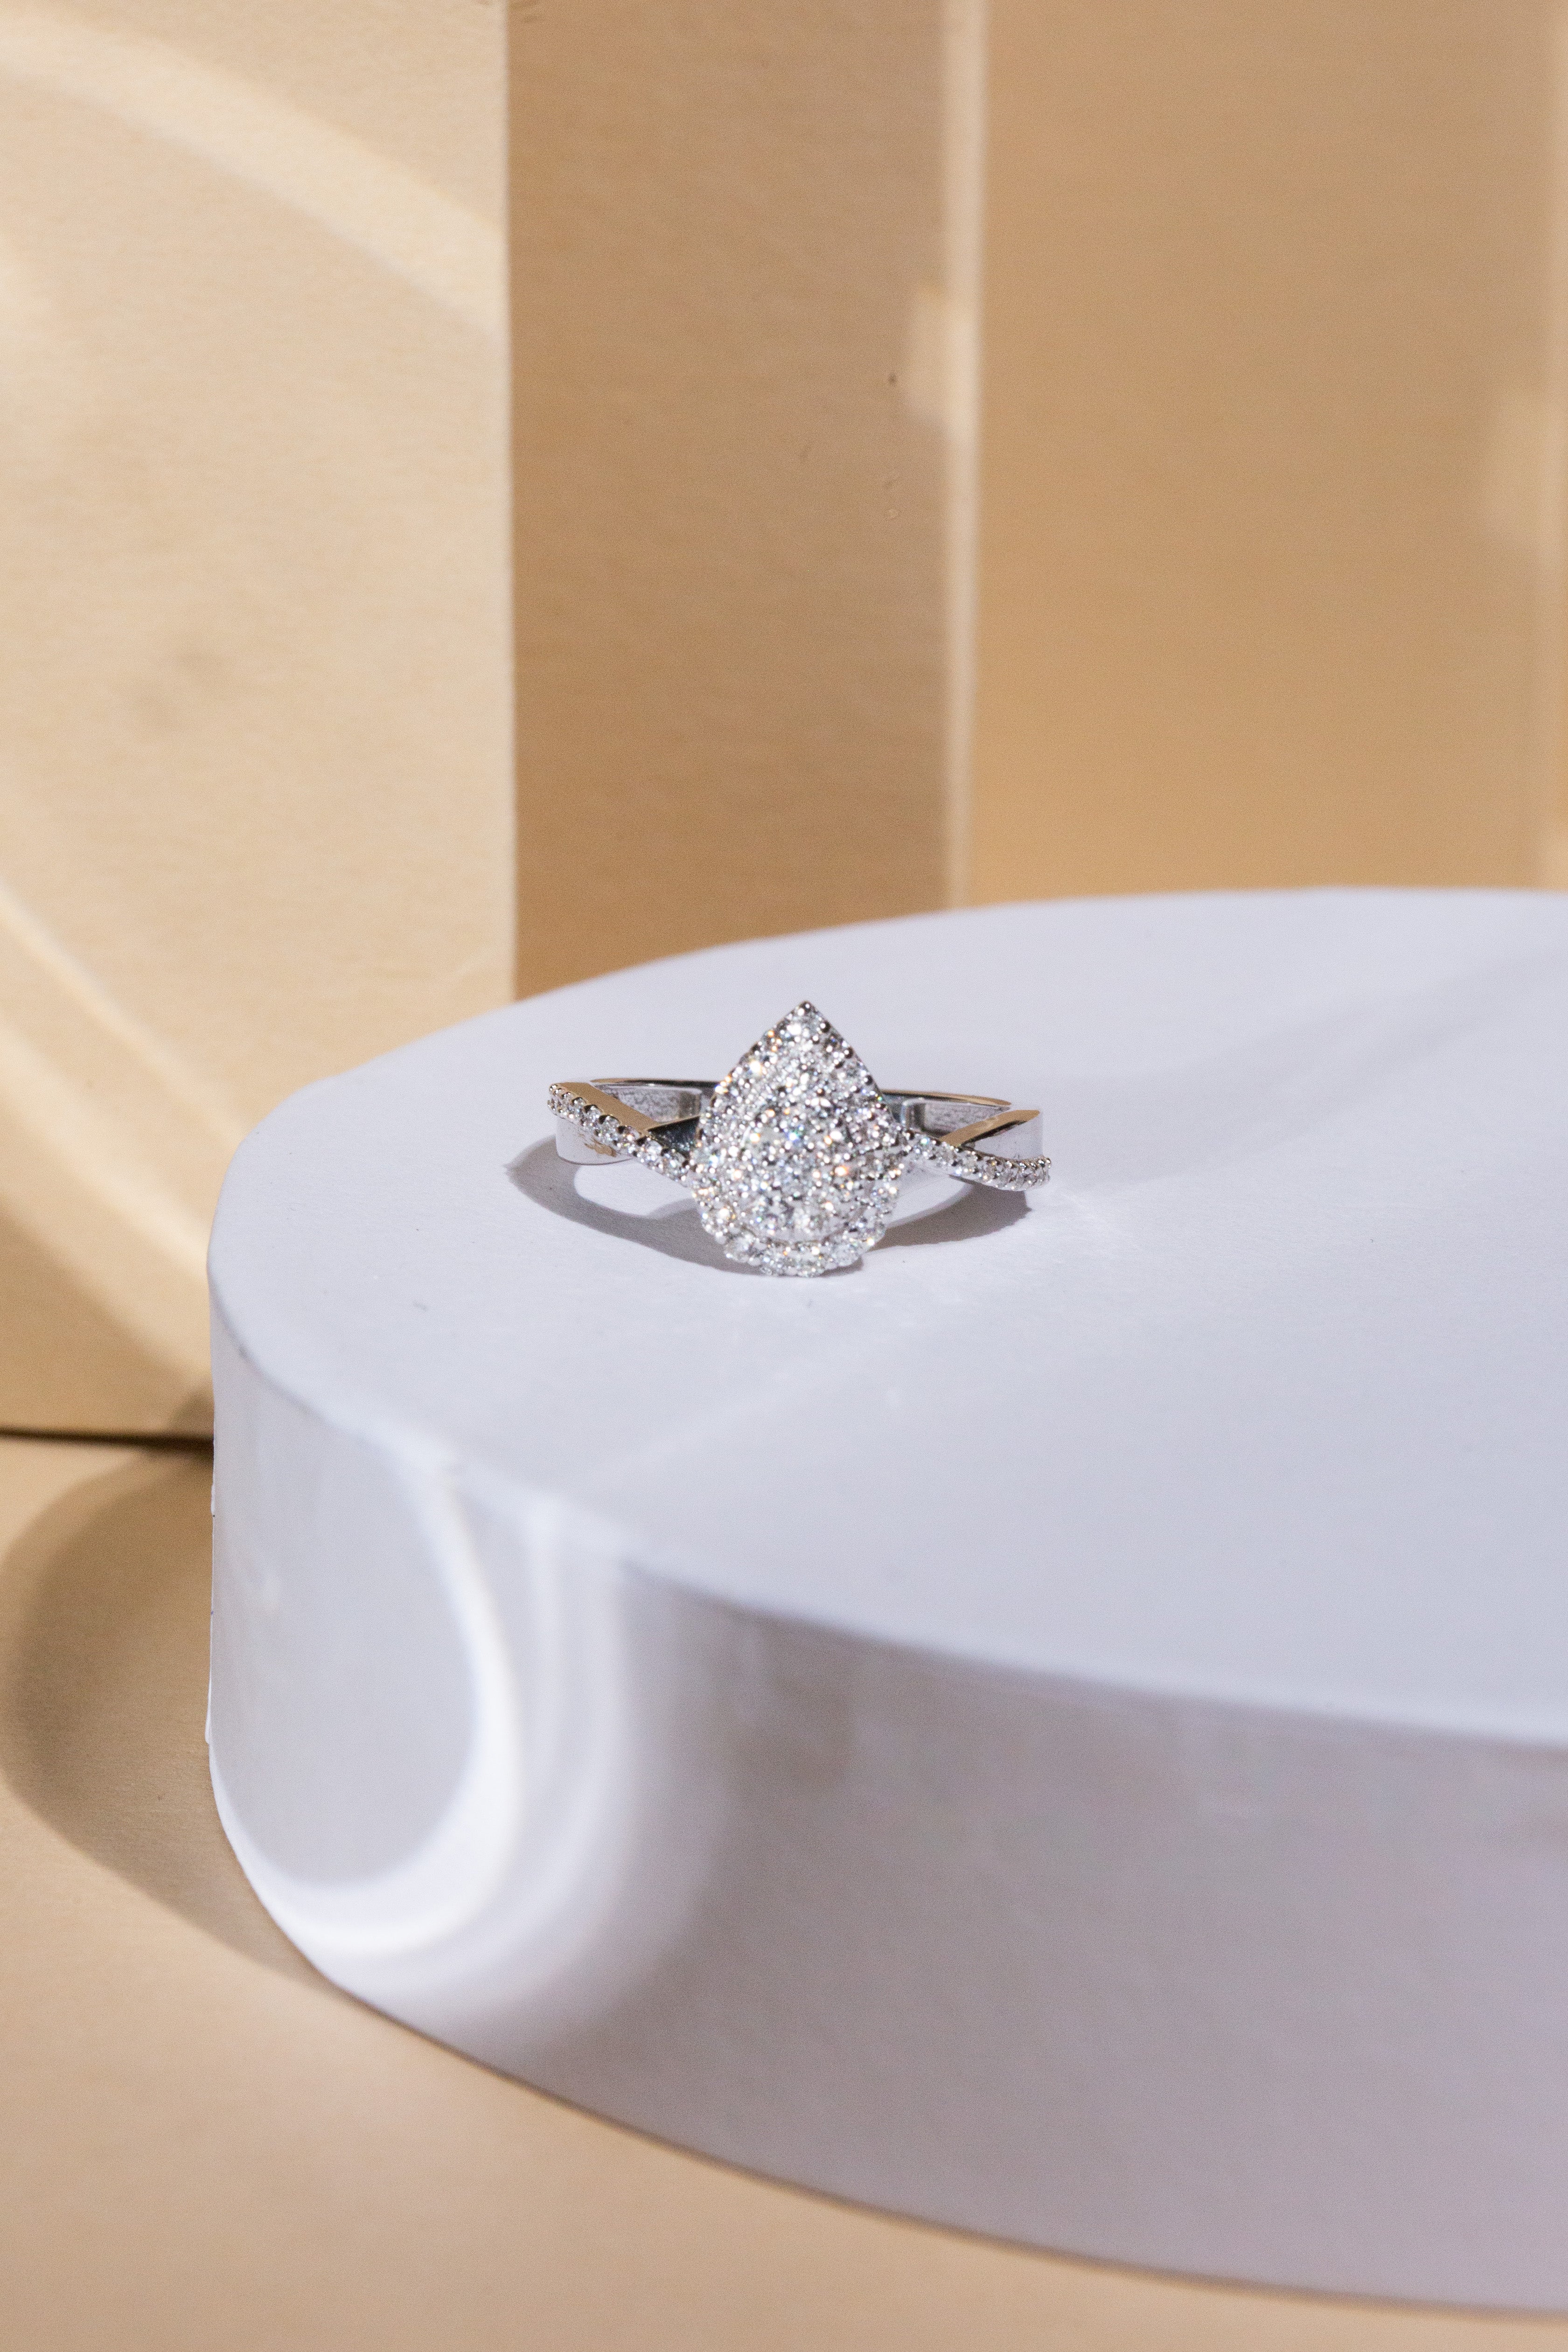 9ct White Gold Ladies Diamond Cluster Engagement Ring - 1102757